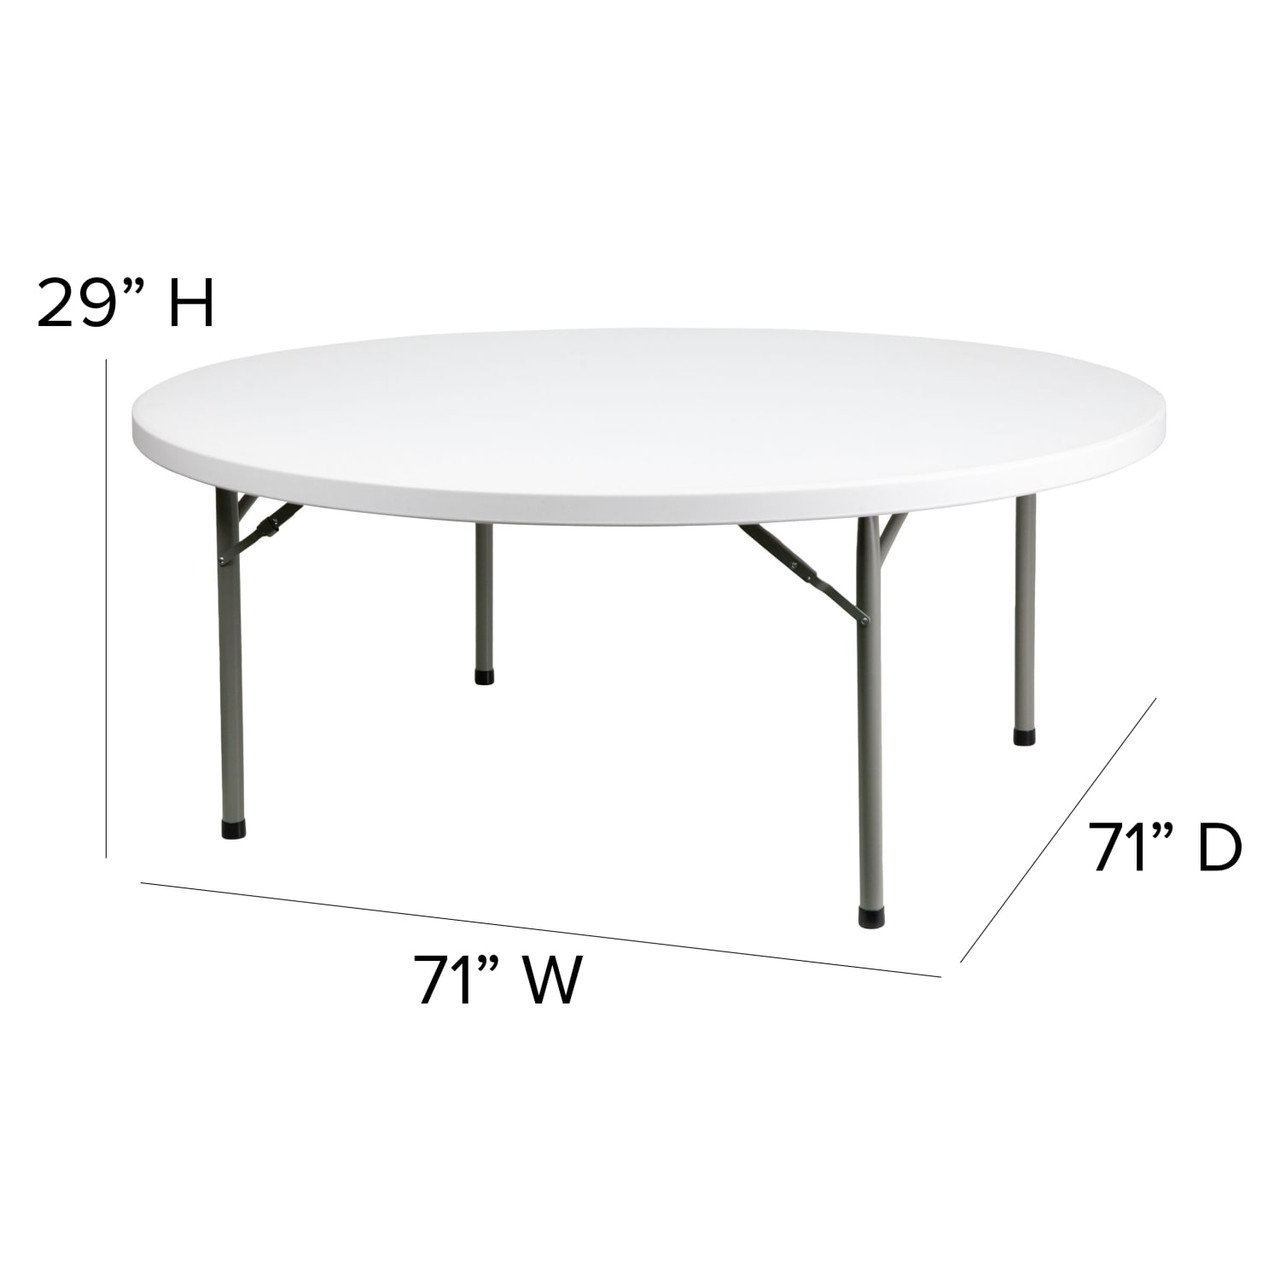 6-Foot Round Granite White Plastic Folding Table